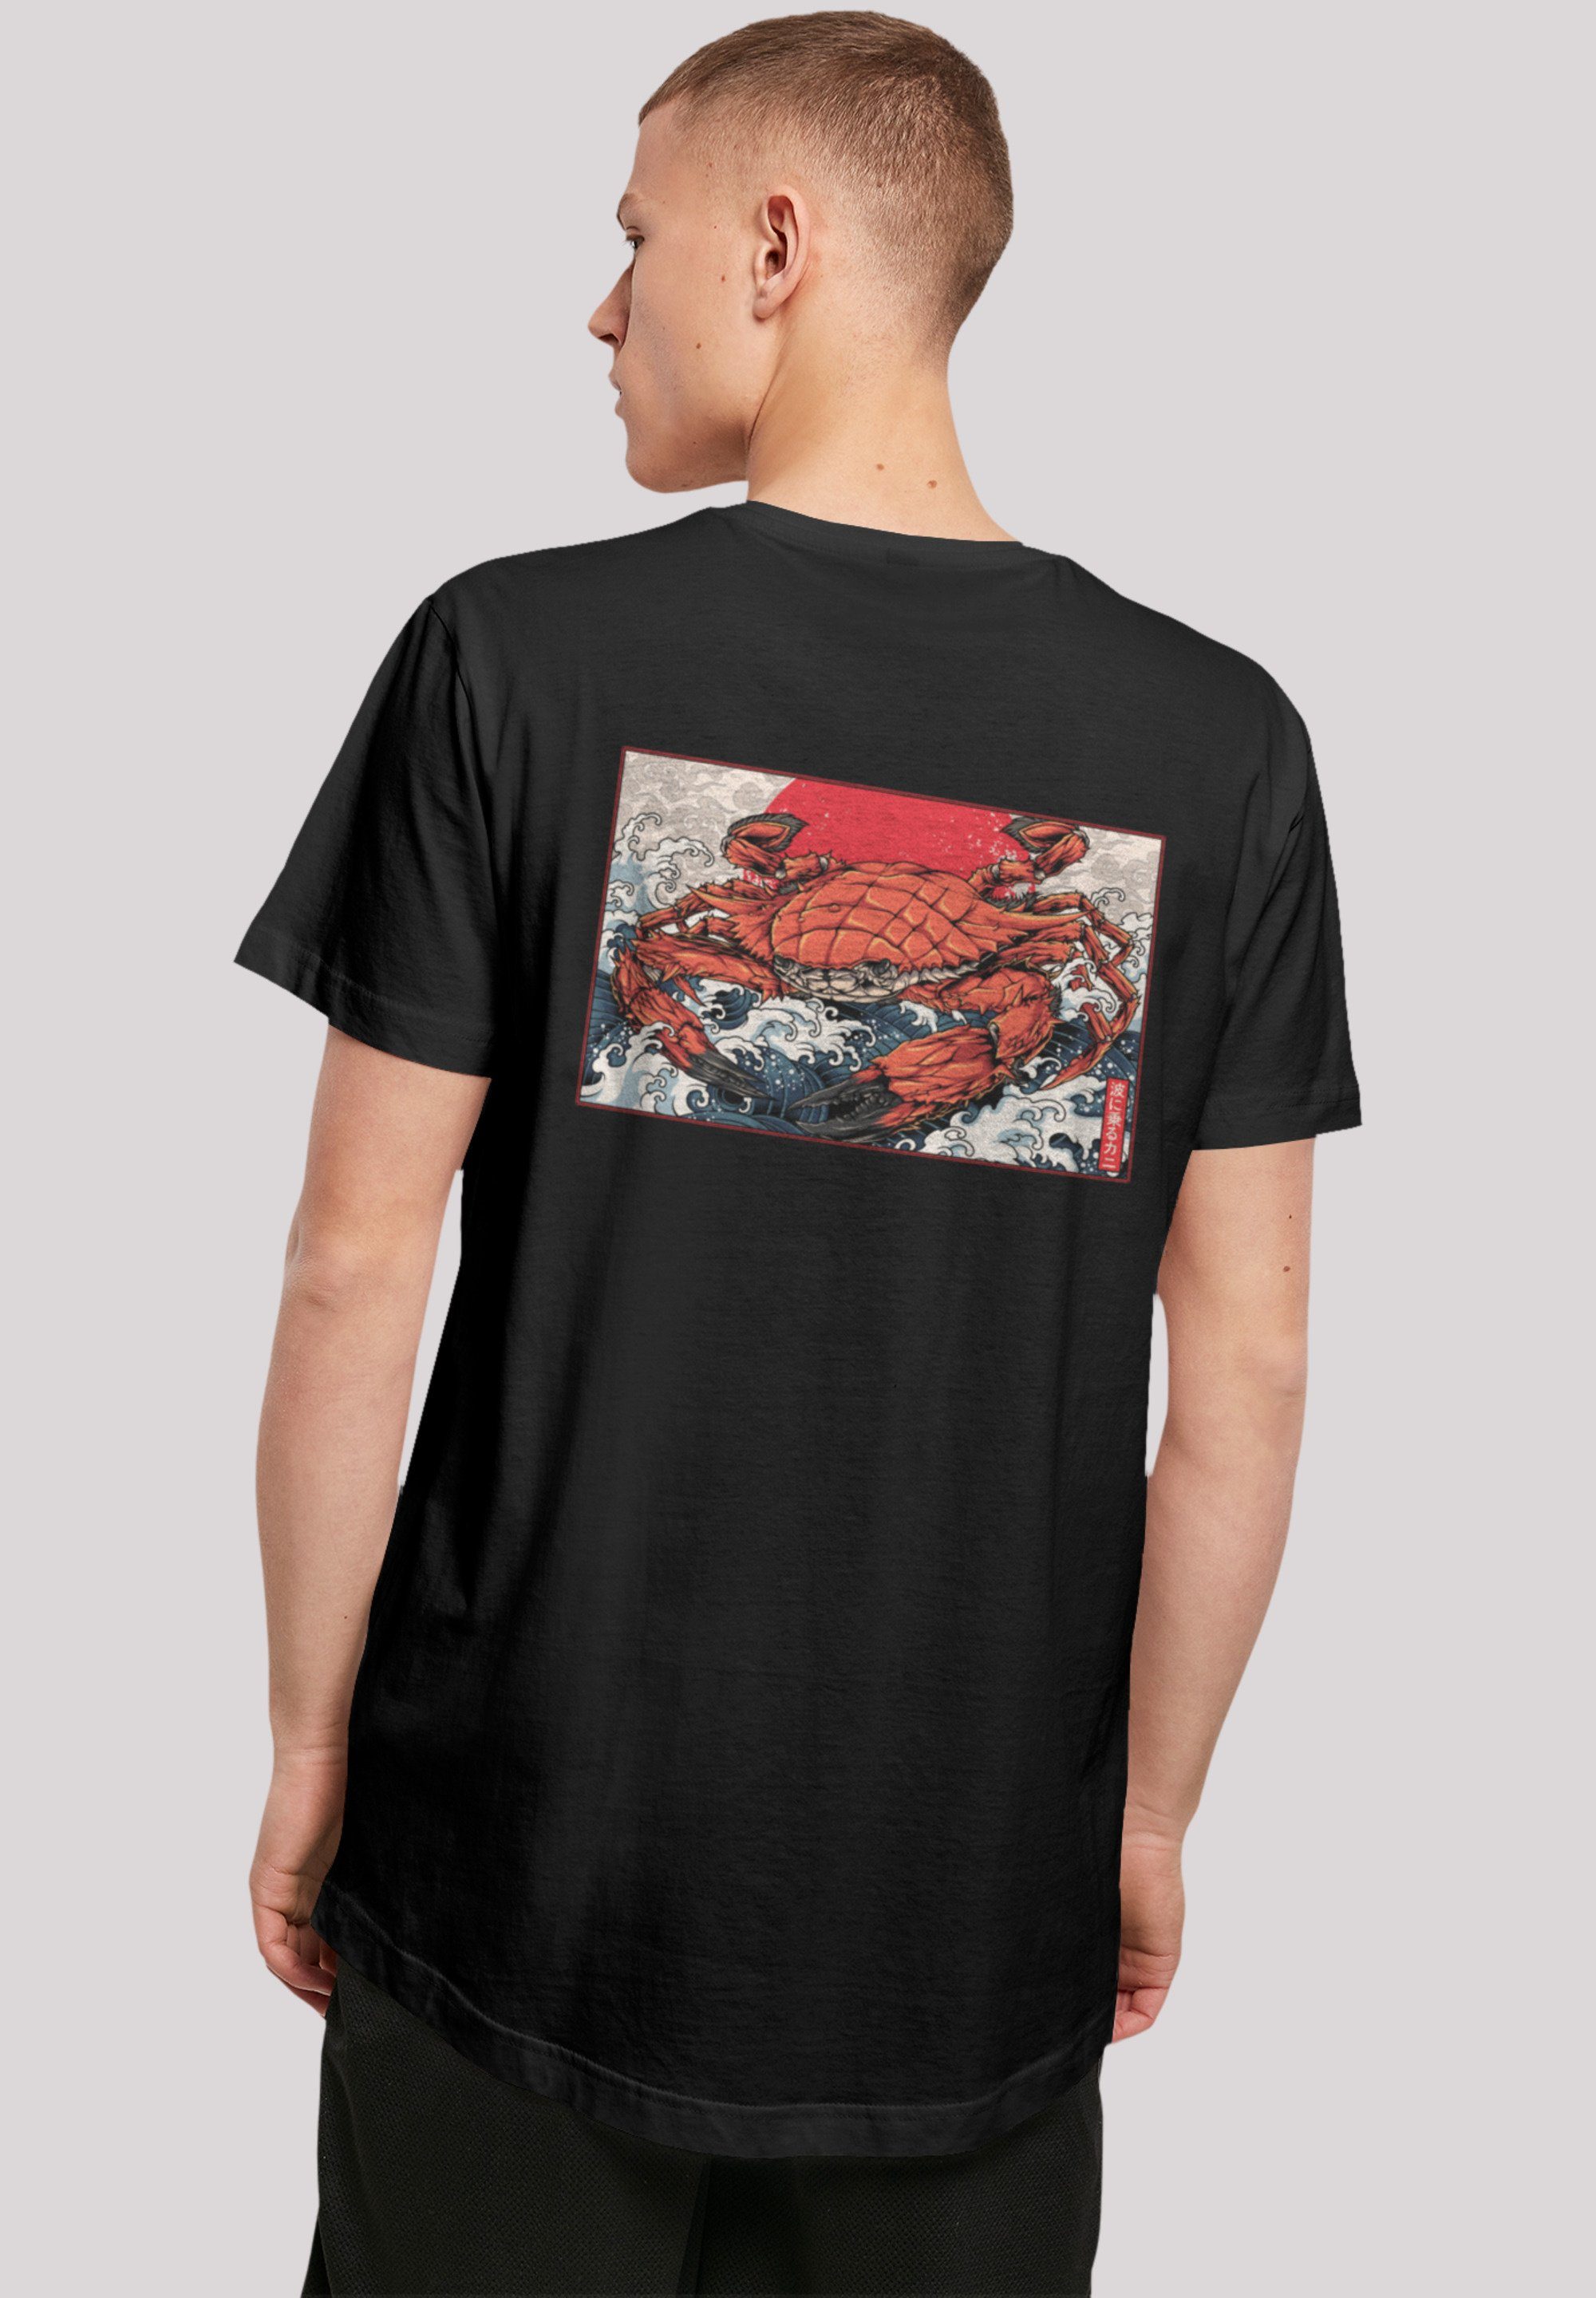 F4NT4STIC T-Shirt Welle Crab Japan Print schwarz